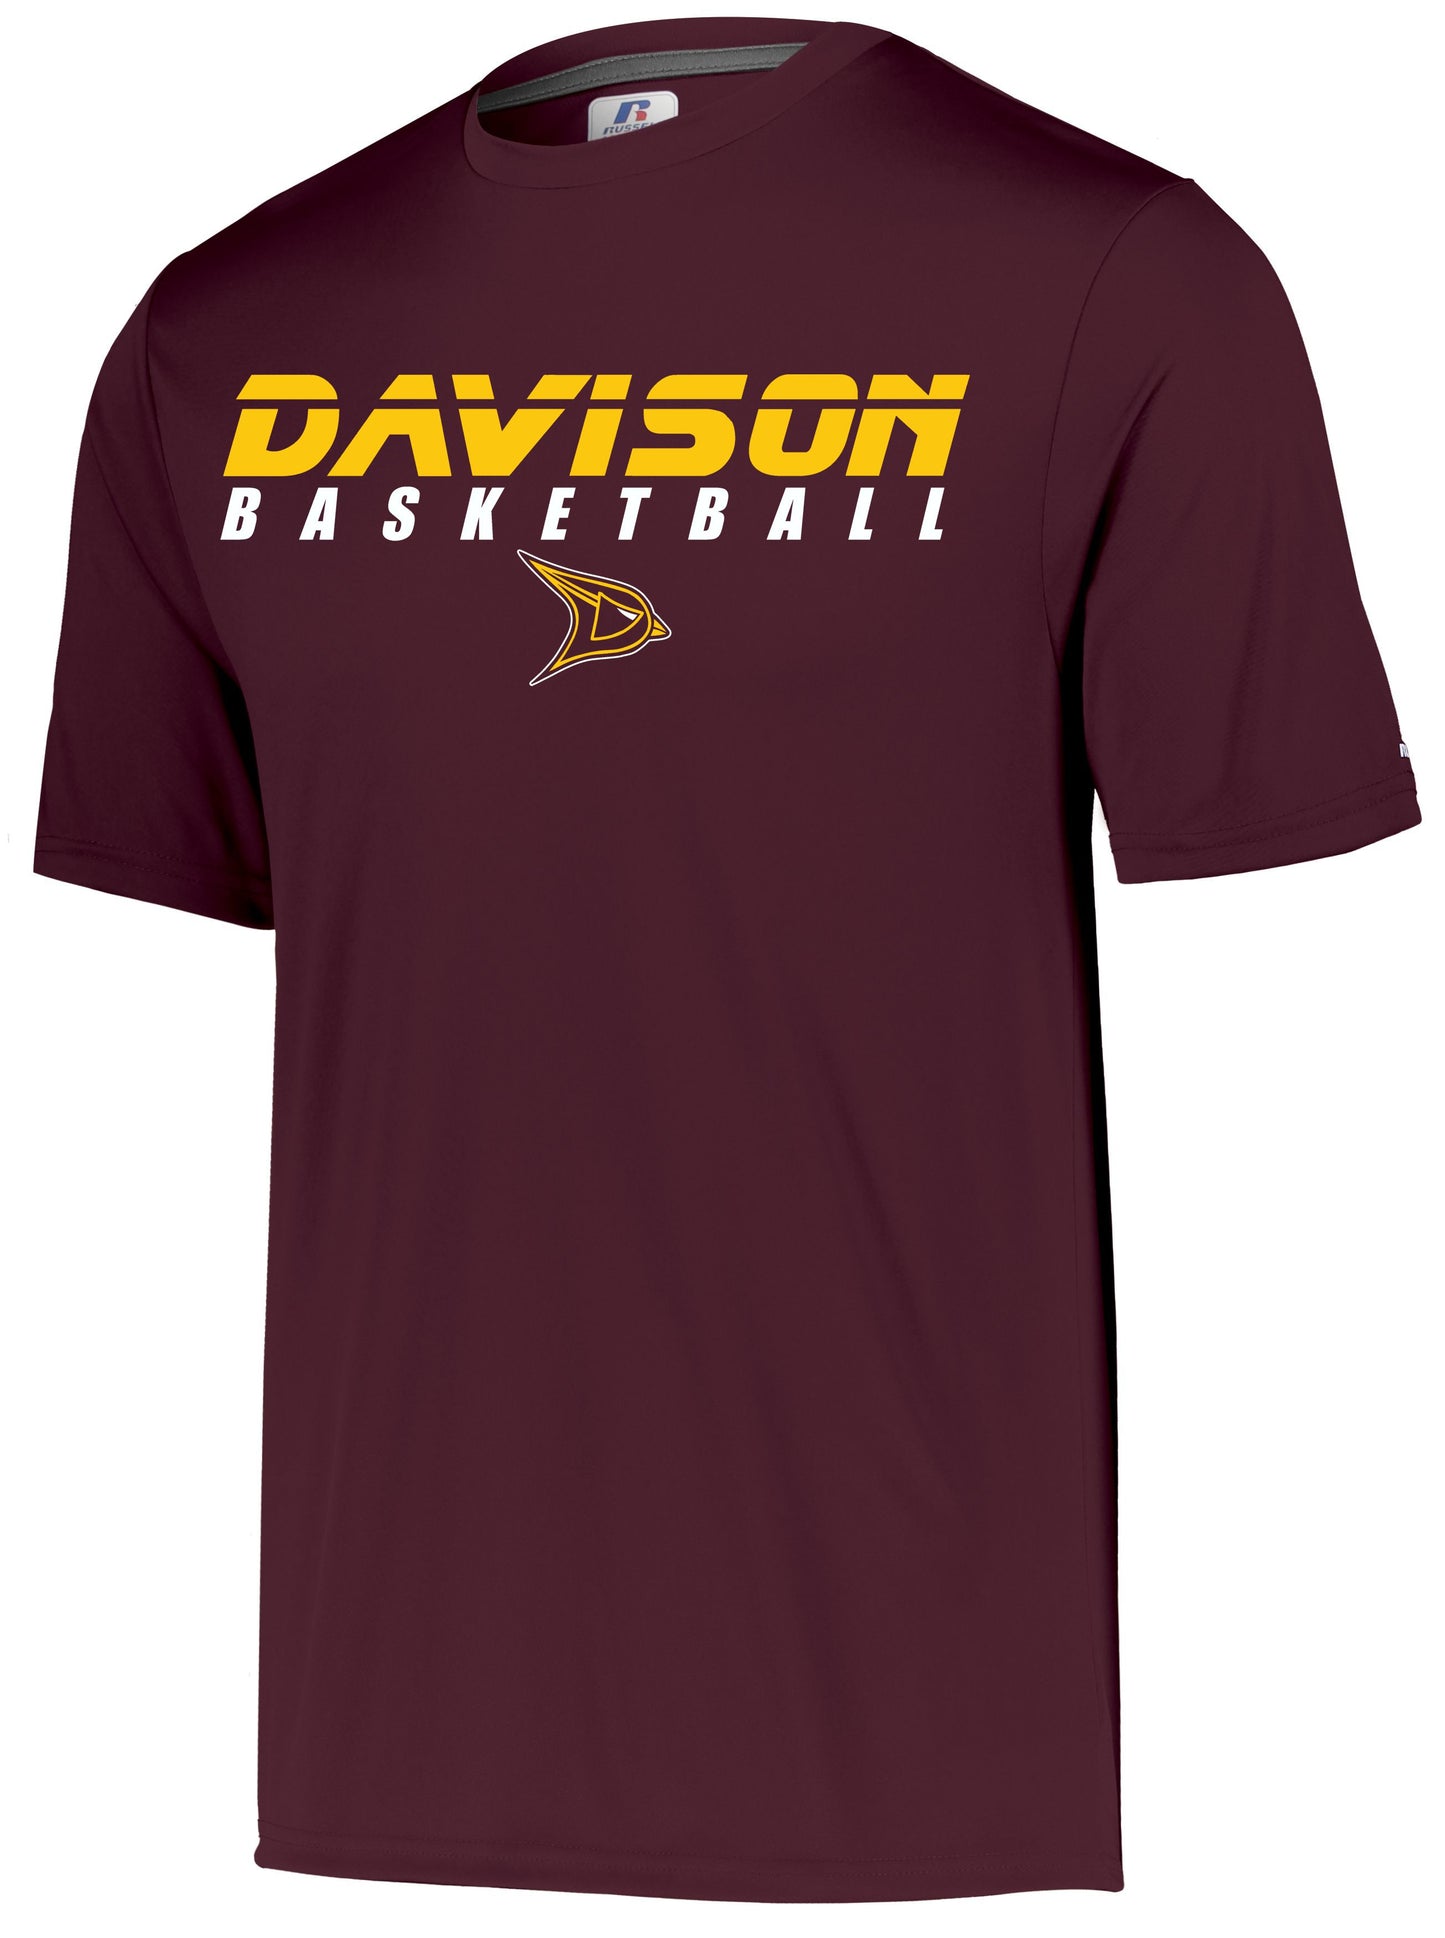 Davison Basketball Performance T-shirt